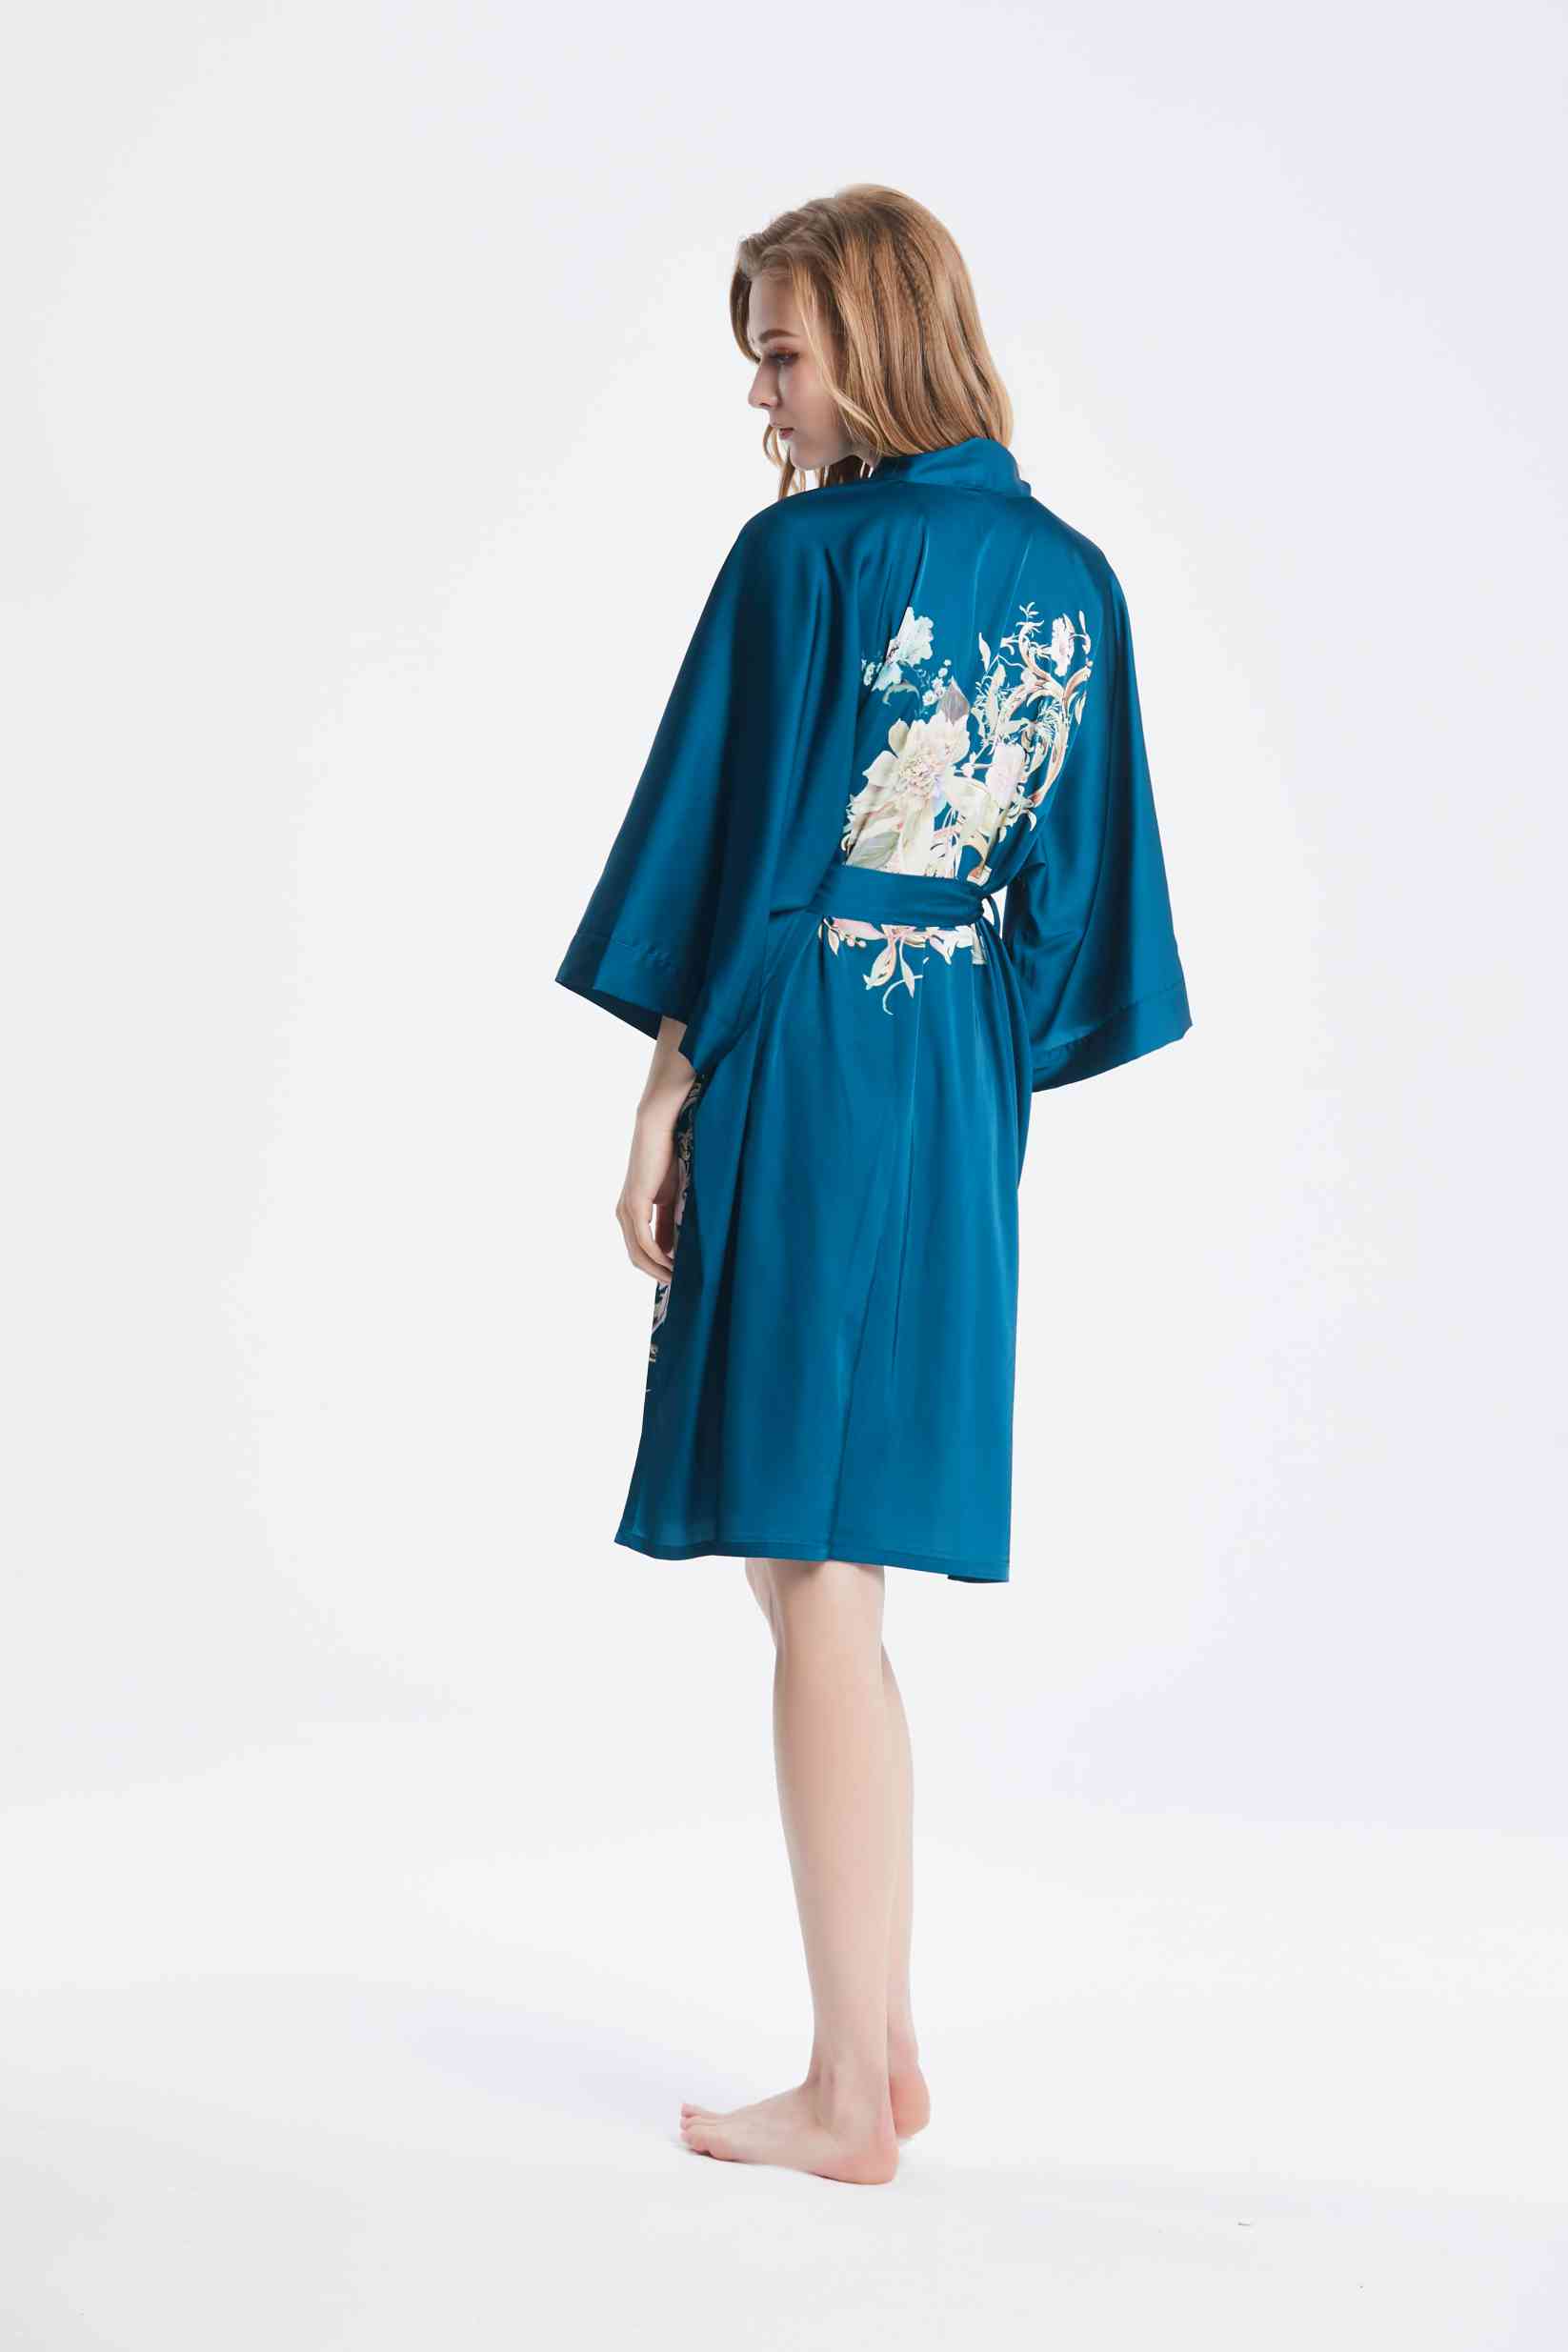 Best Ladies Short Sheer Washable Silk Blue Kimono Bathrobe Cardigan Gownnighty with Print Factory Wholesale